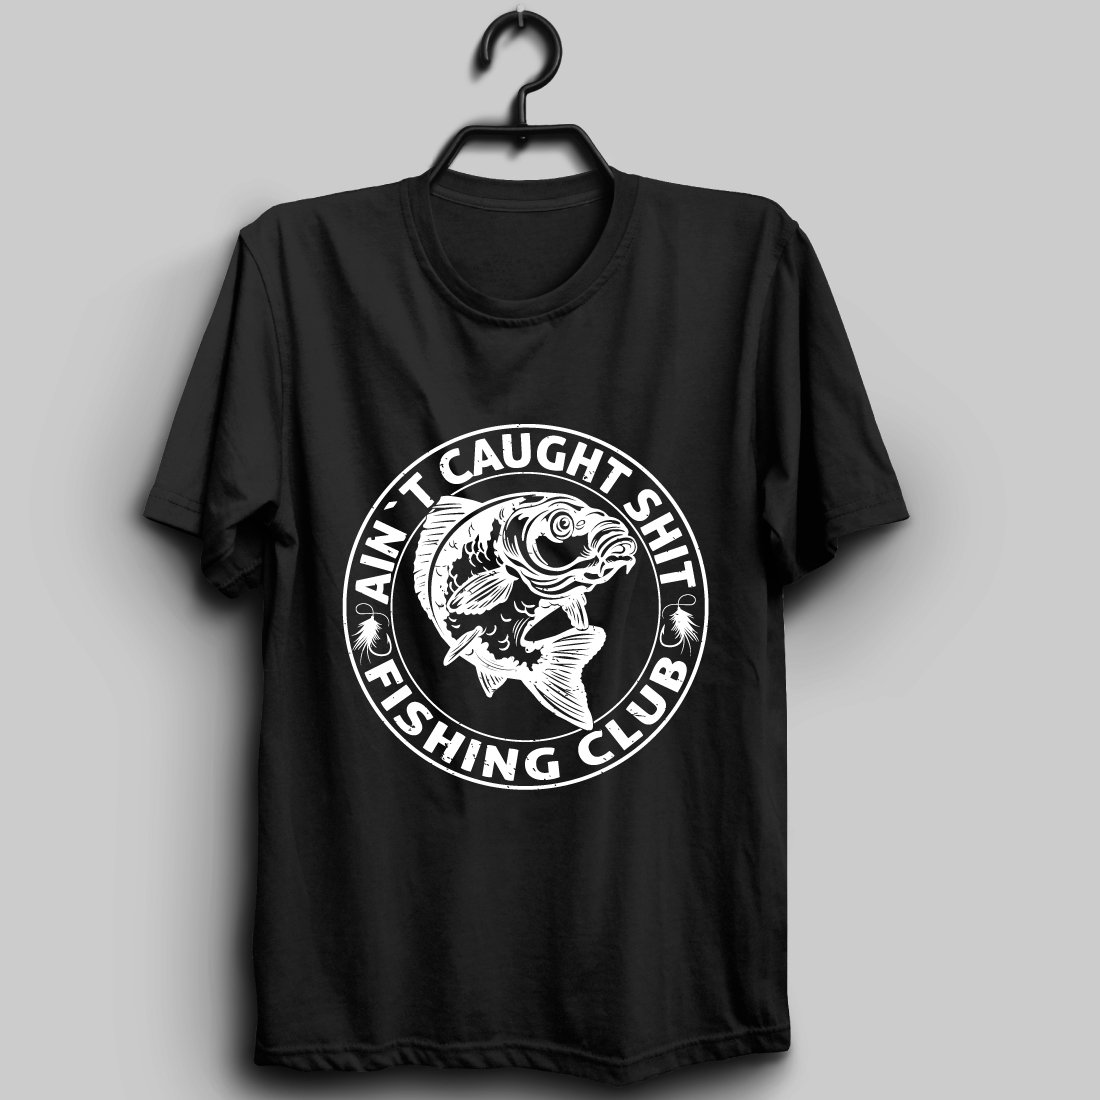 fishing t shirt design05 564